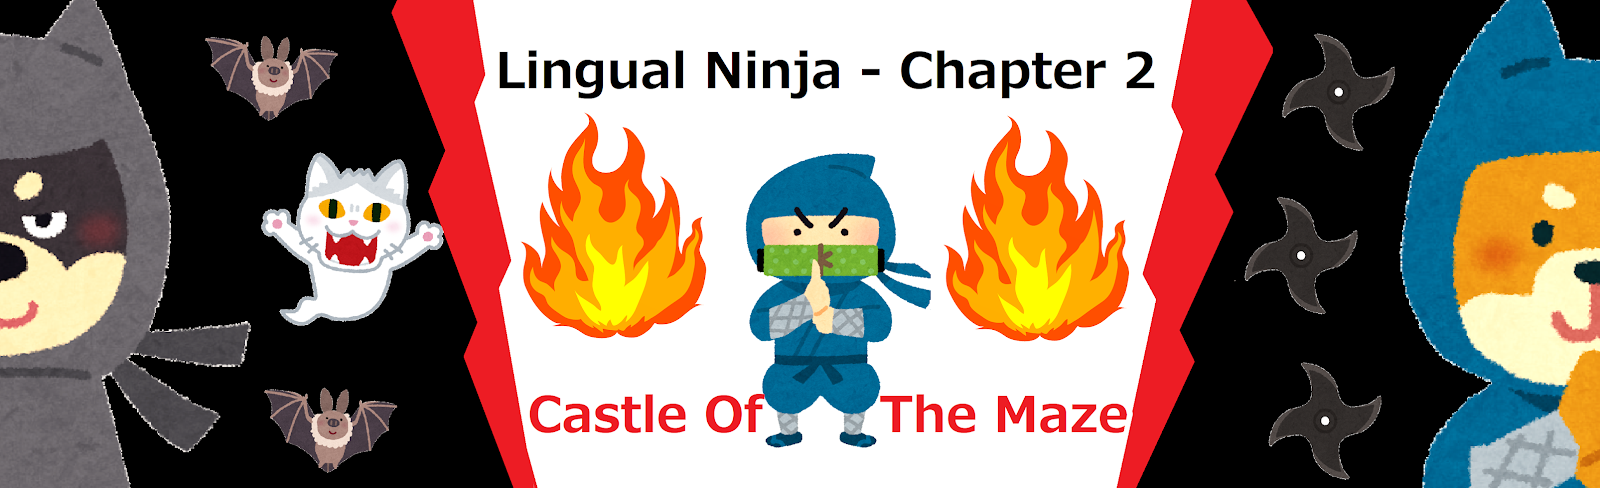 lingual ninja game - Castle of The Maze